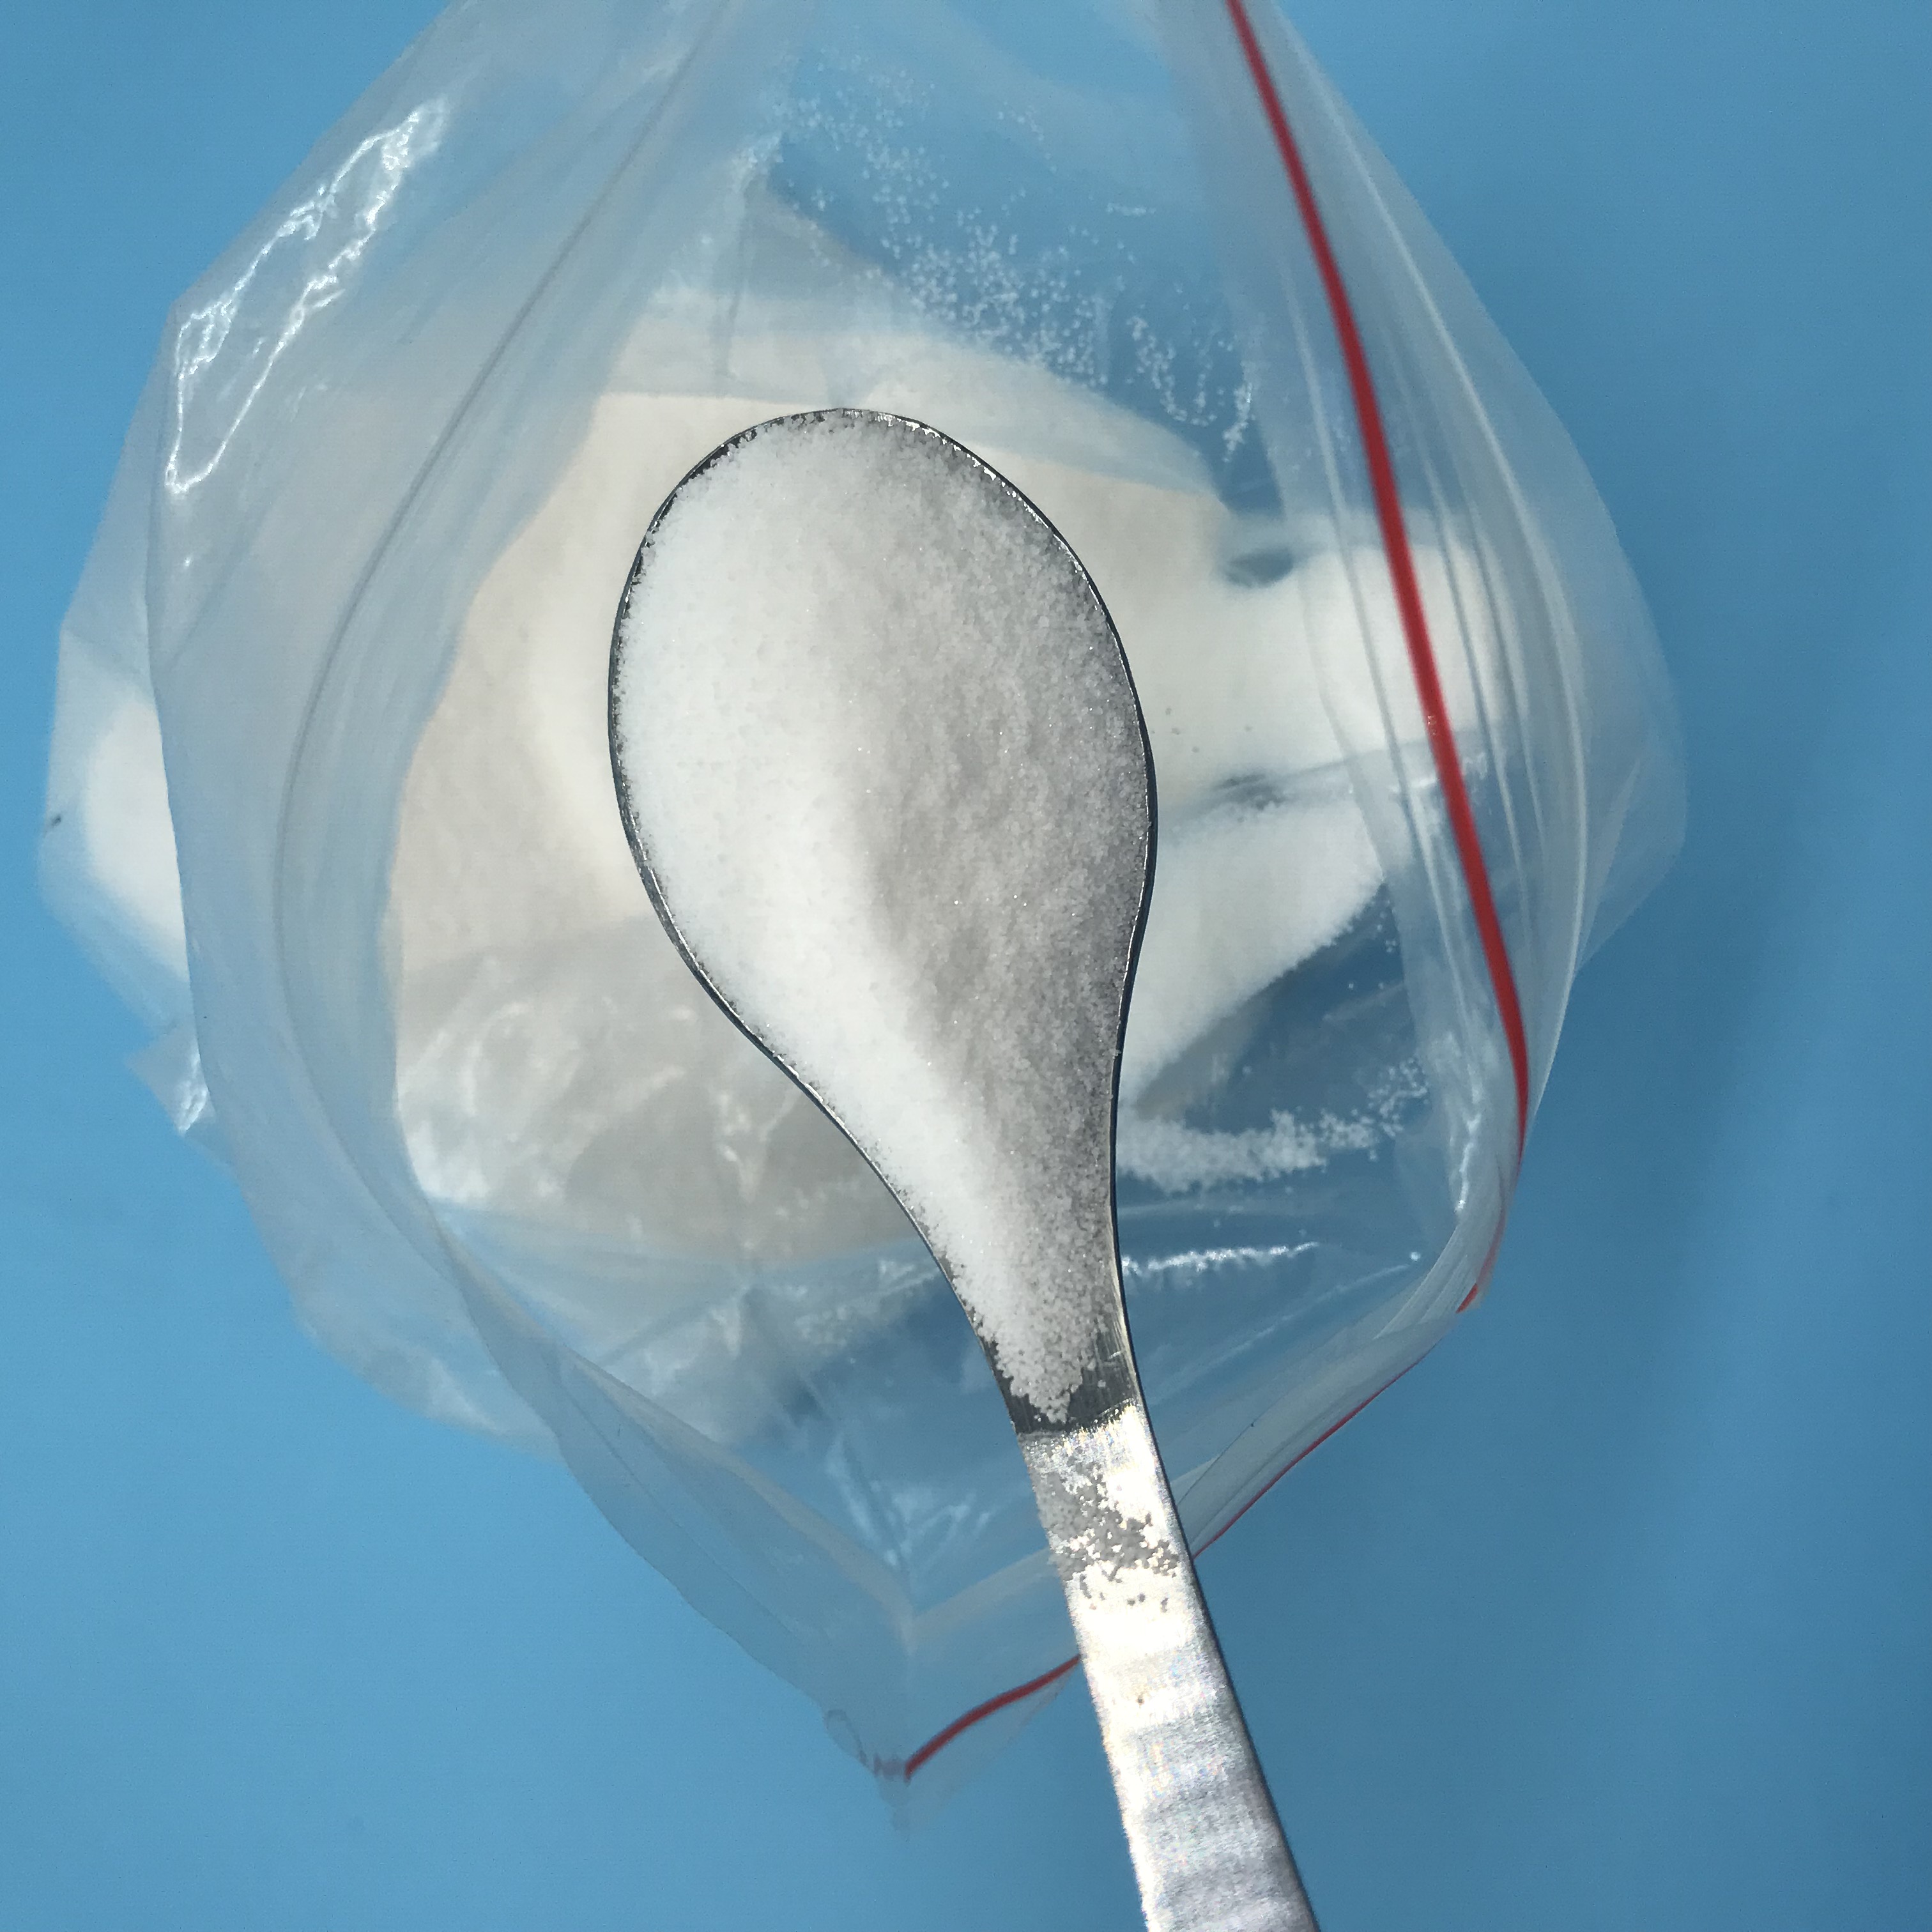 Super Absorbent Polymer for diaper (SAP)